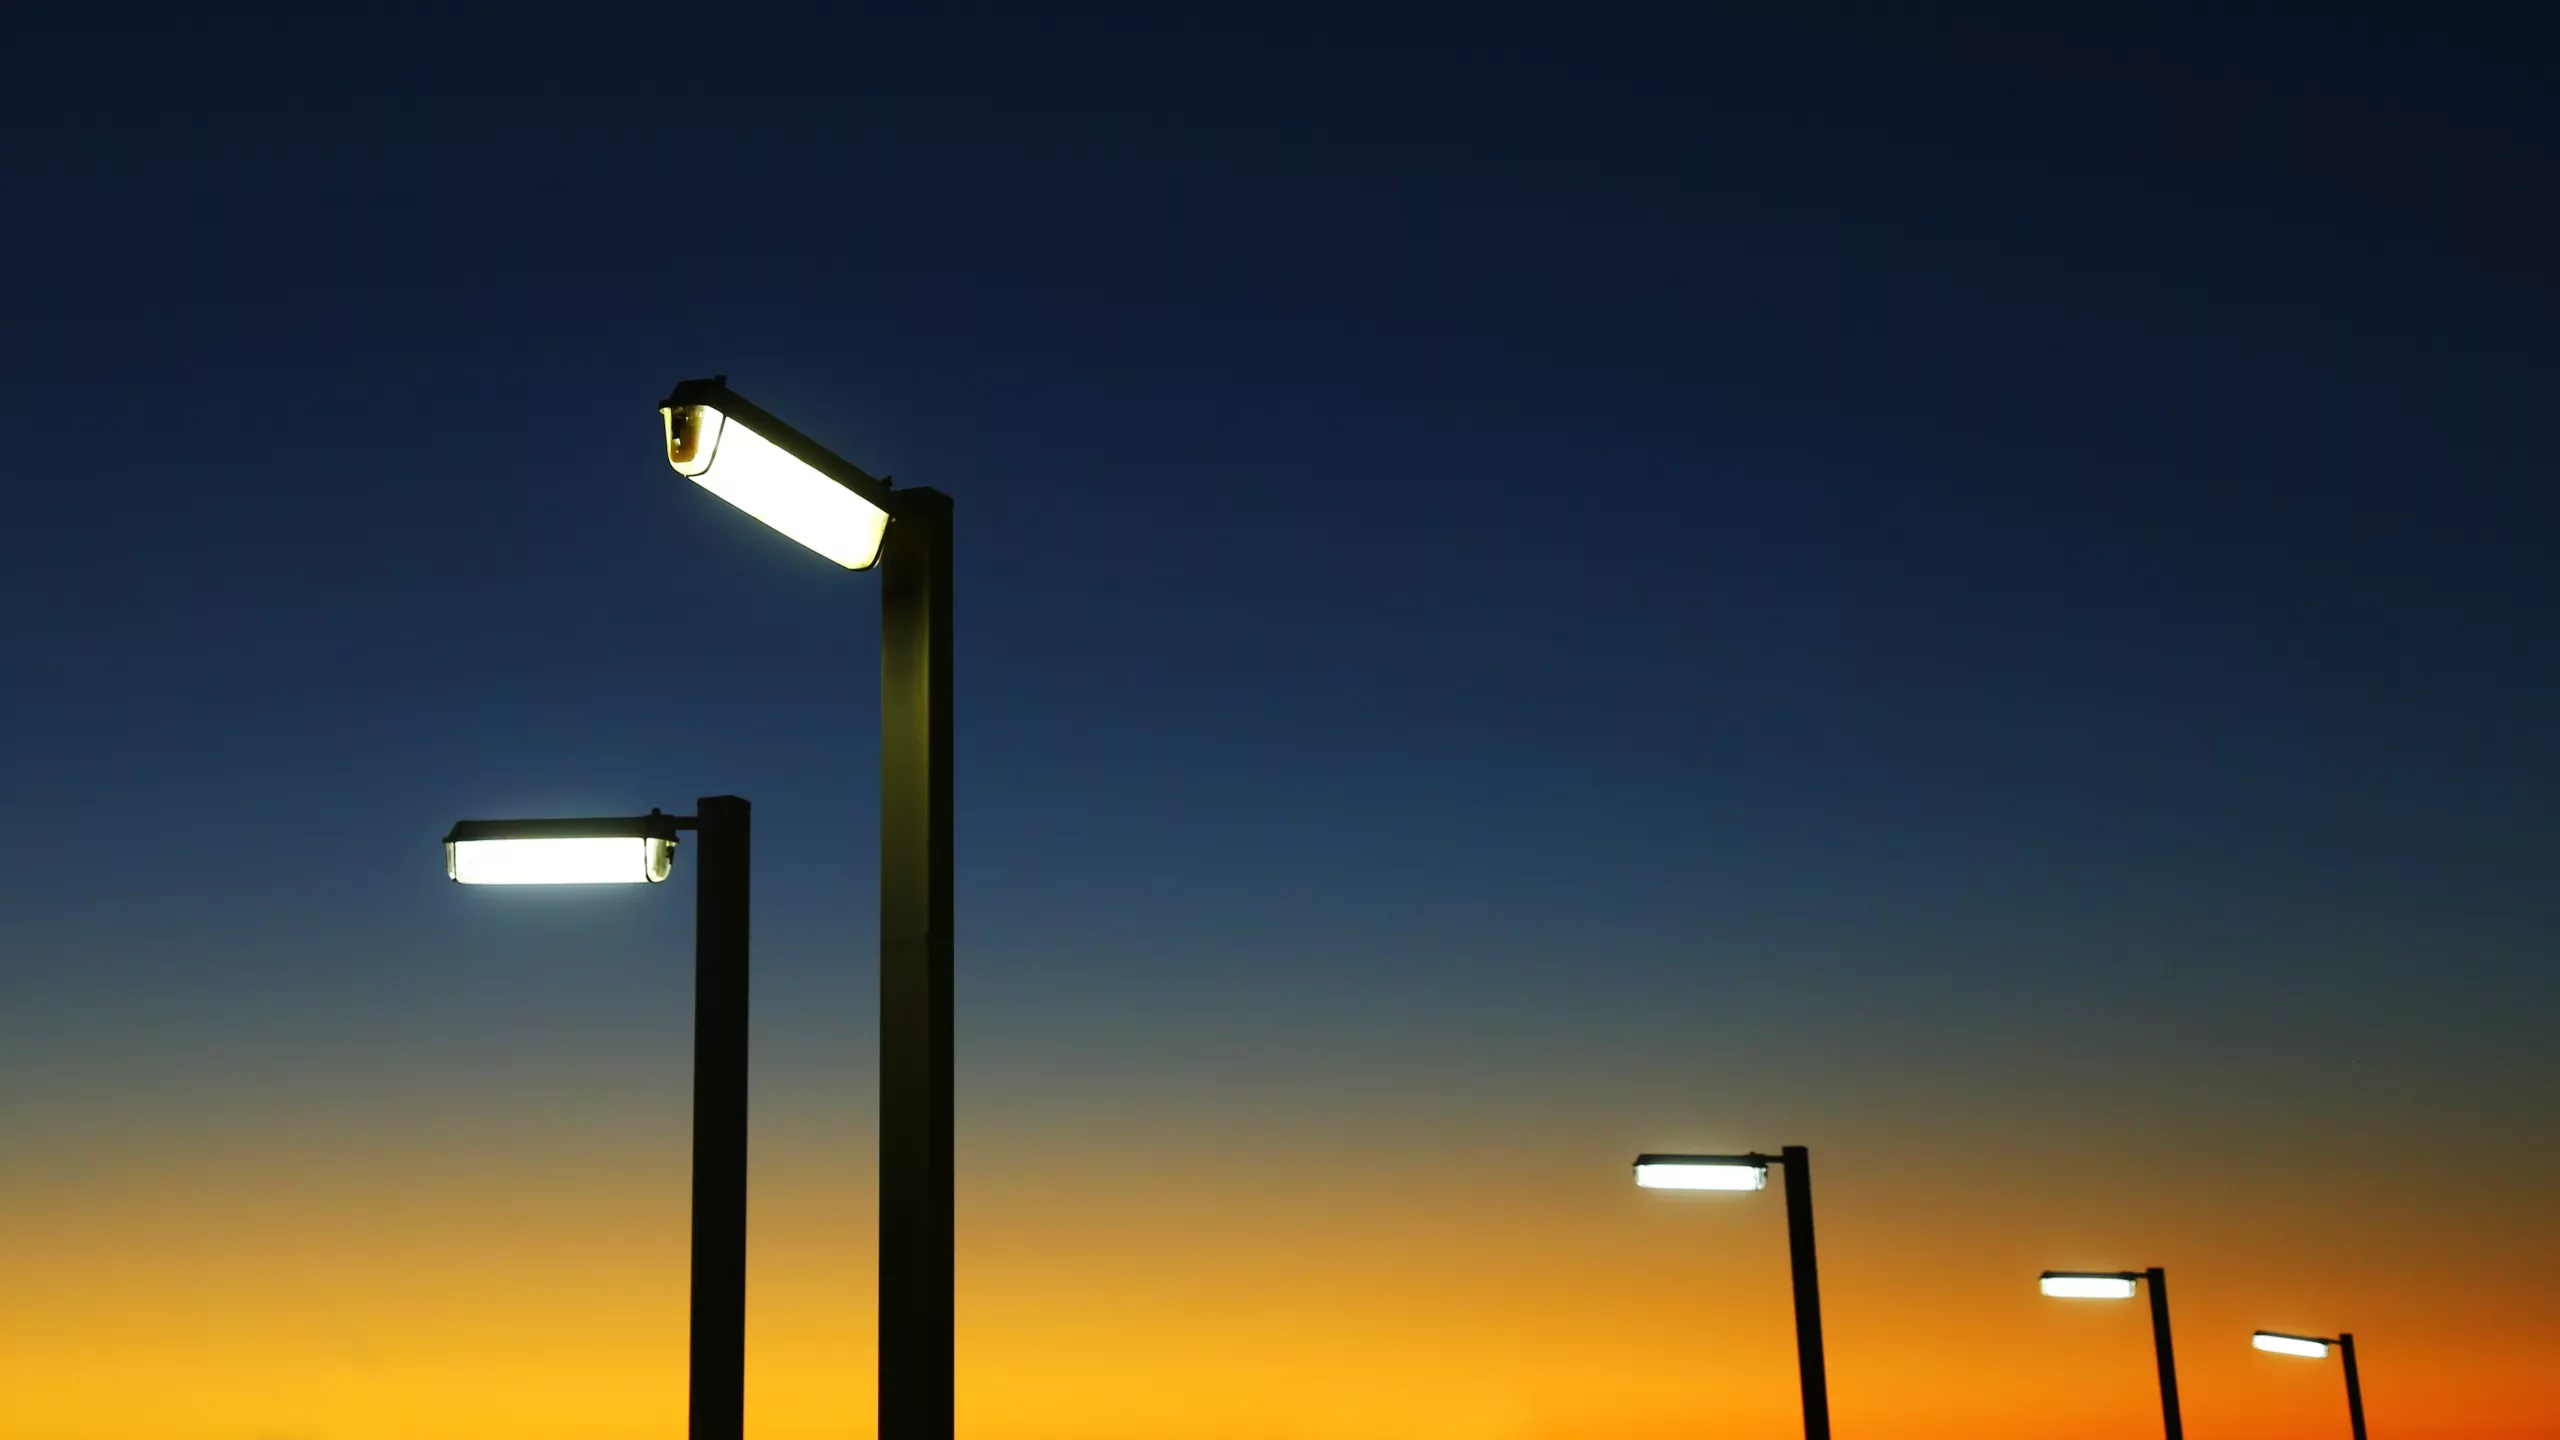 Green lighting transformation LED upgrades and environmental gains